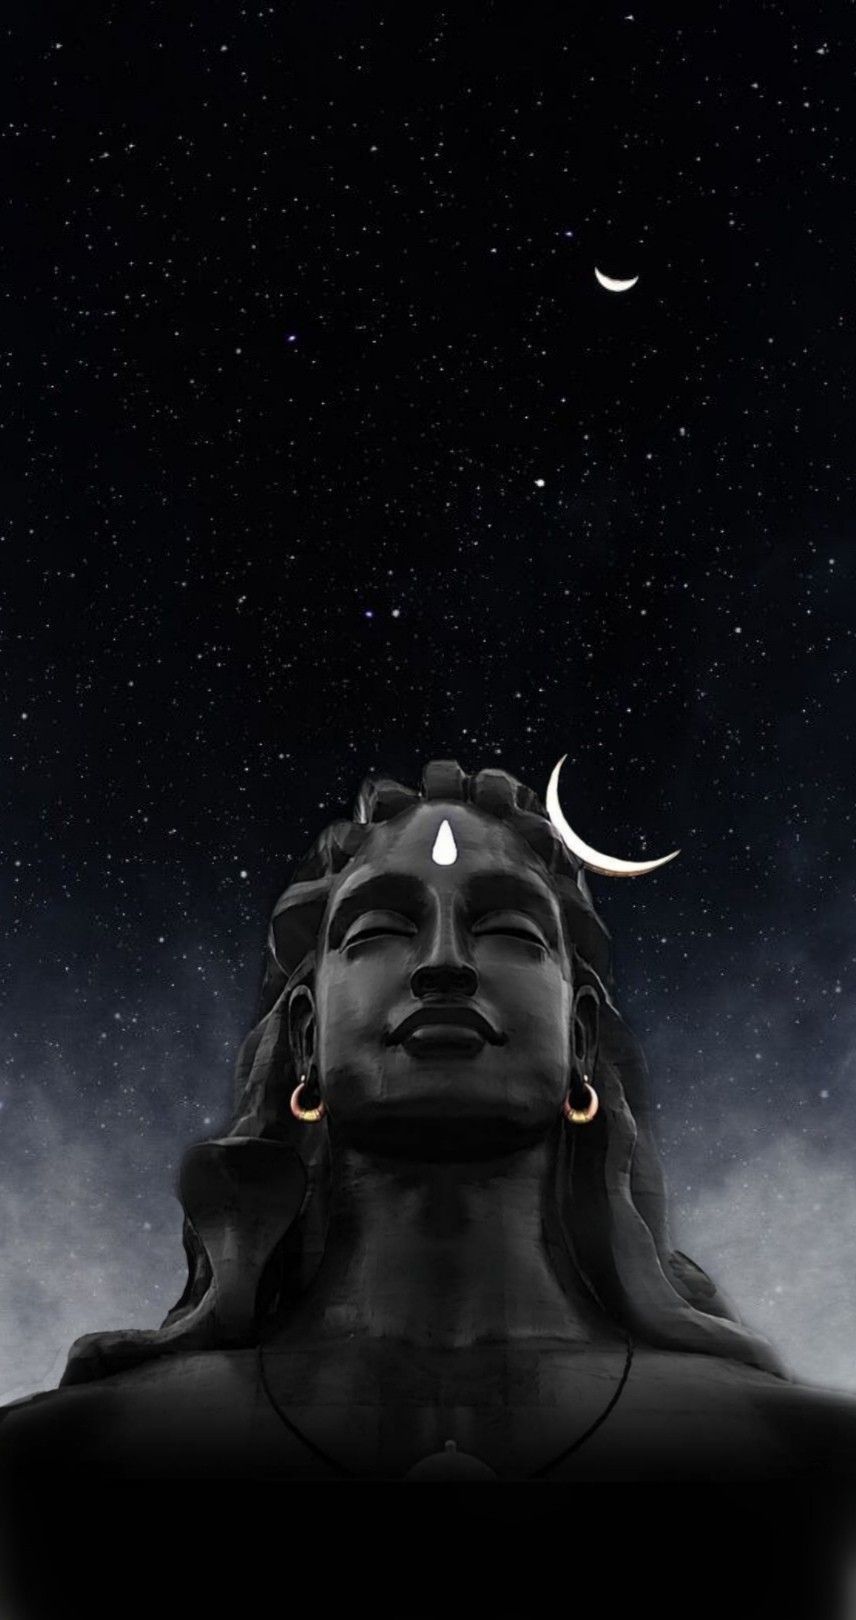 Lord Shiva. Shiva lord wallpaper, Rudra shiva, Lord shiva